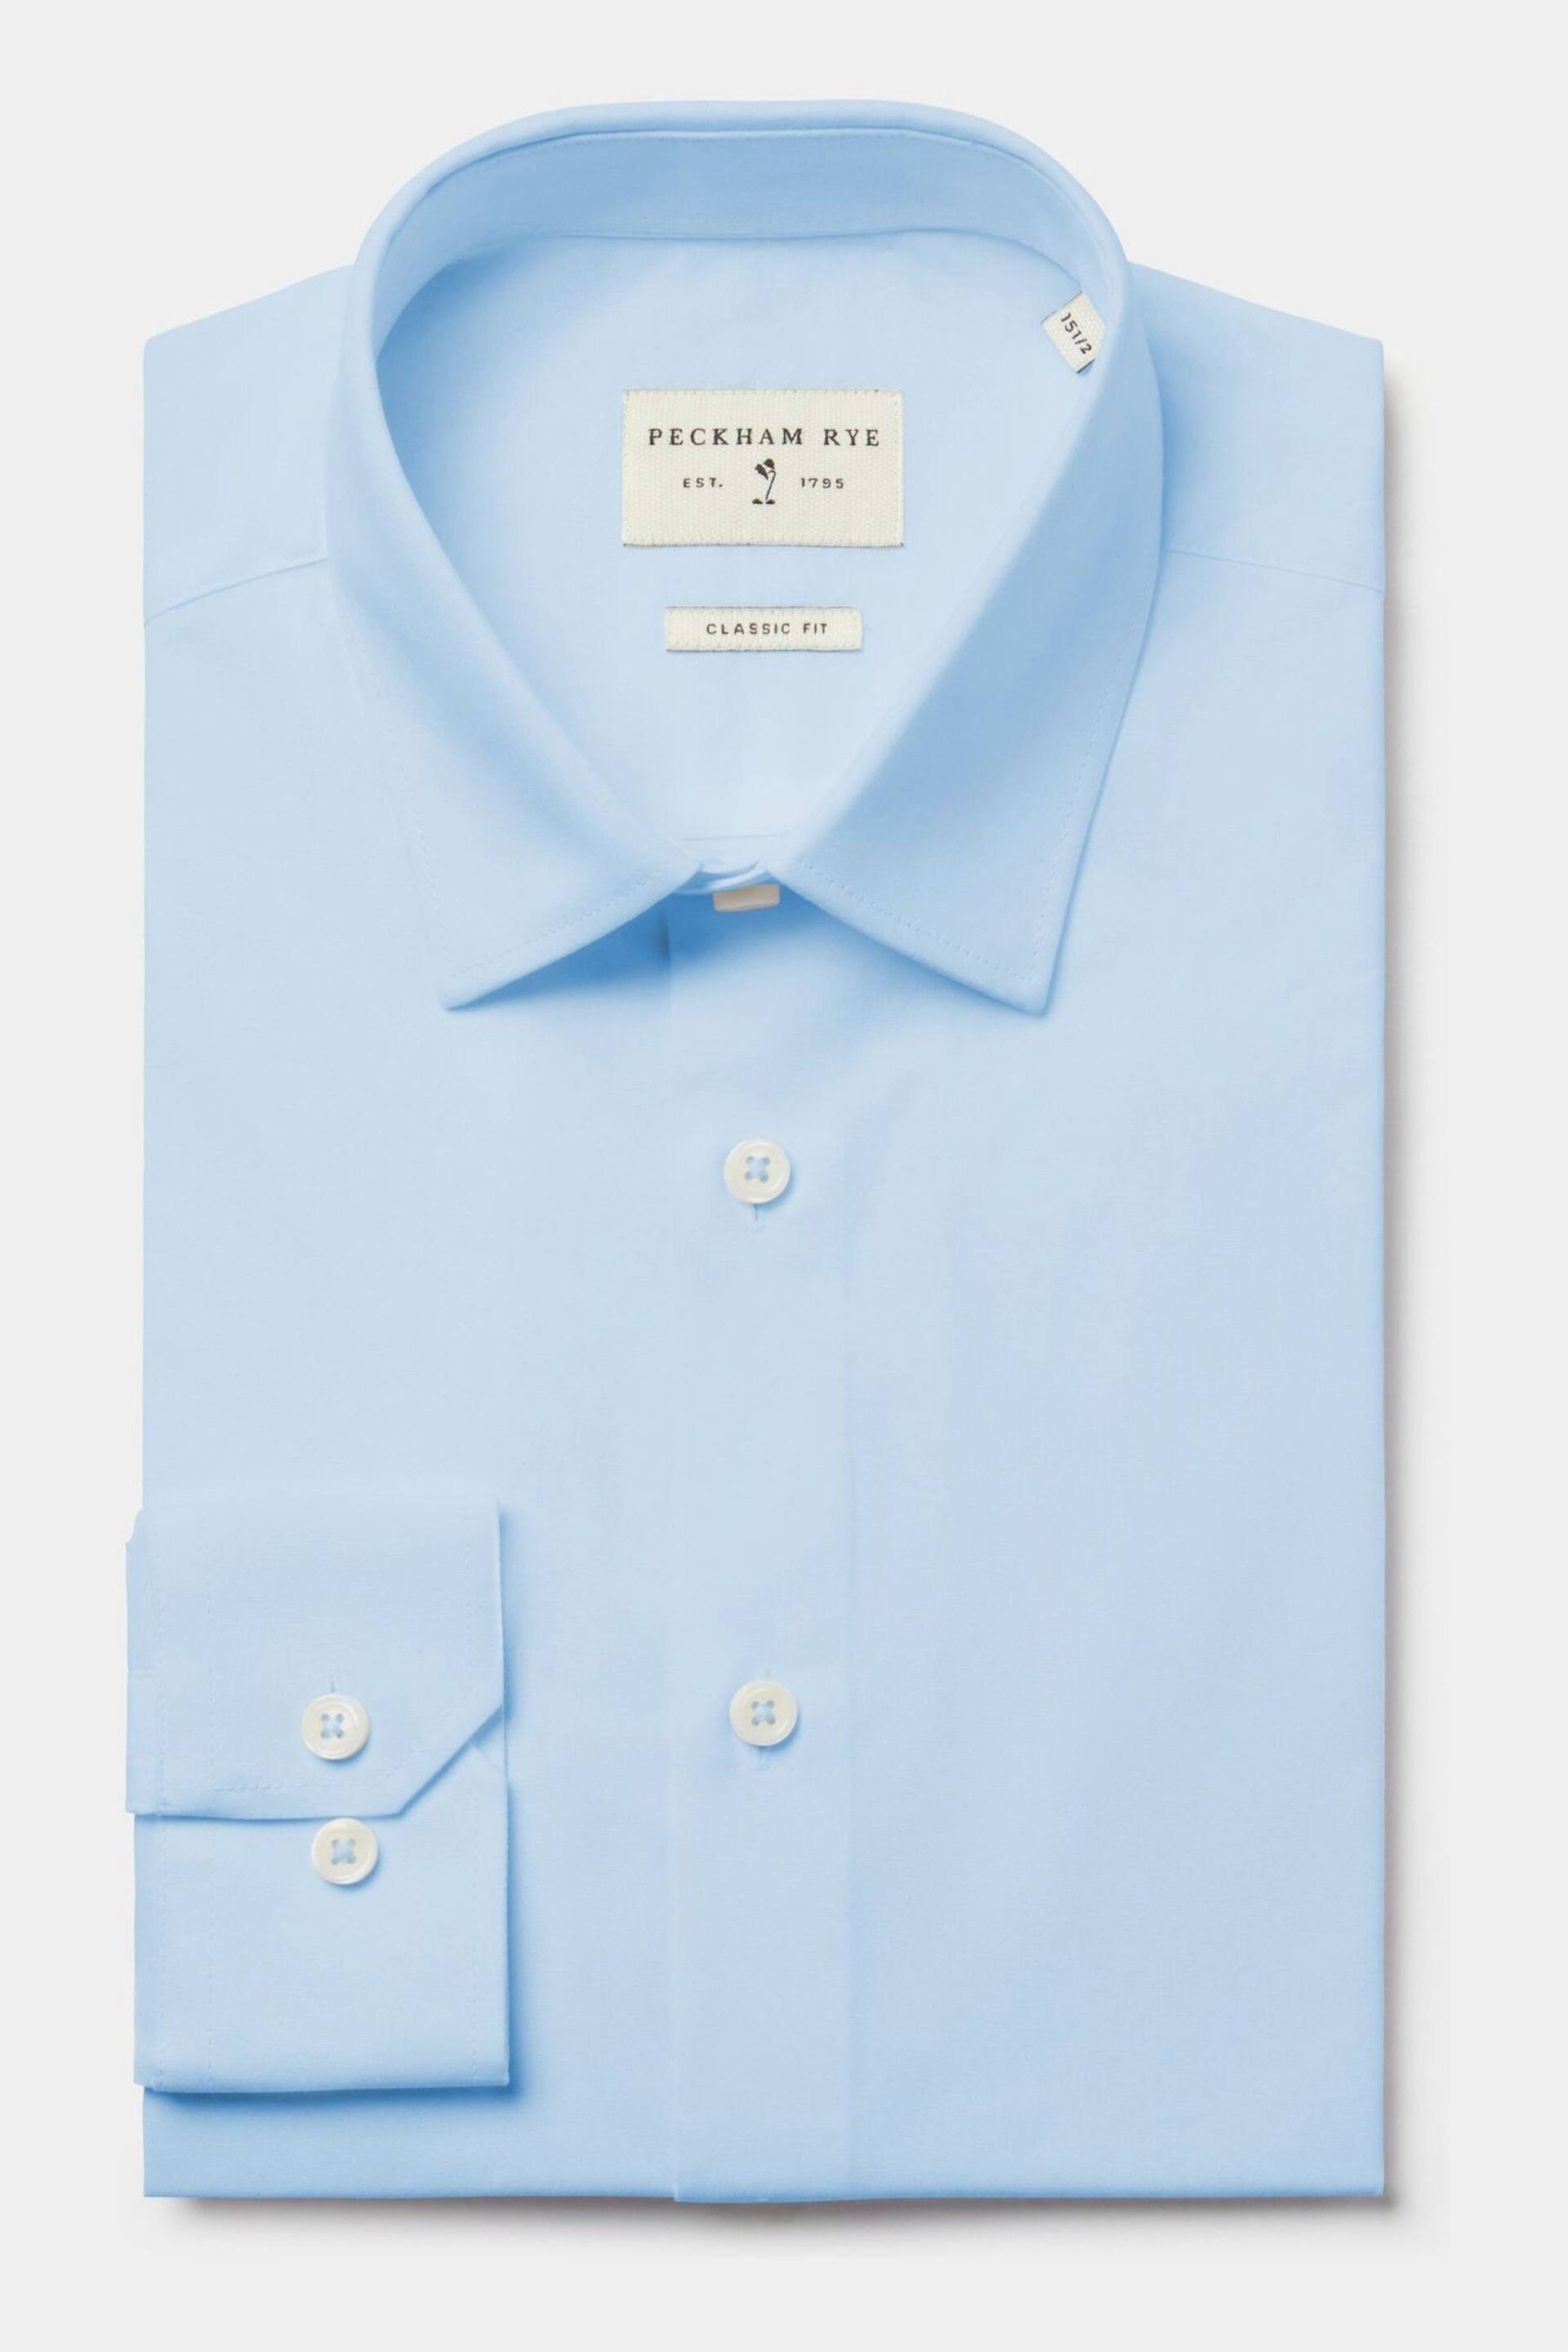 Peckham Rye Poplin Long Sleeve Shirt - Image 6 of 7